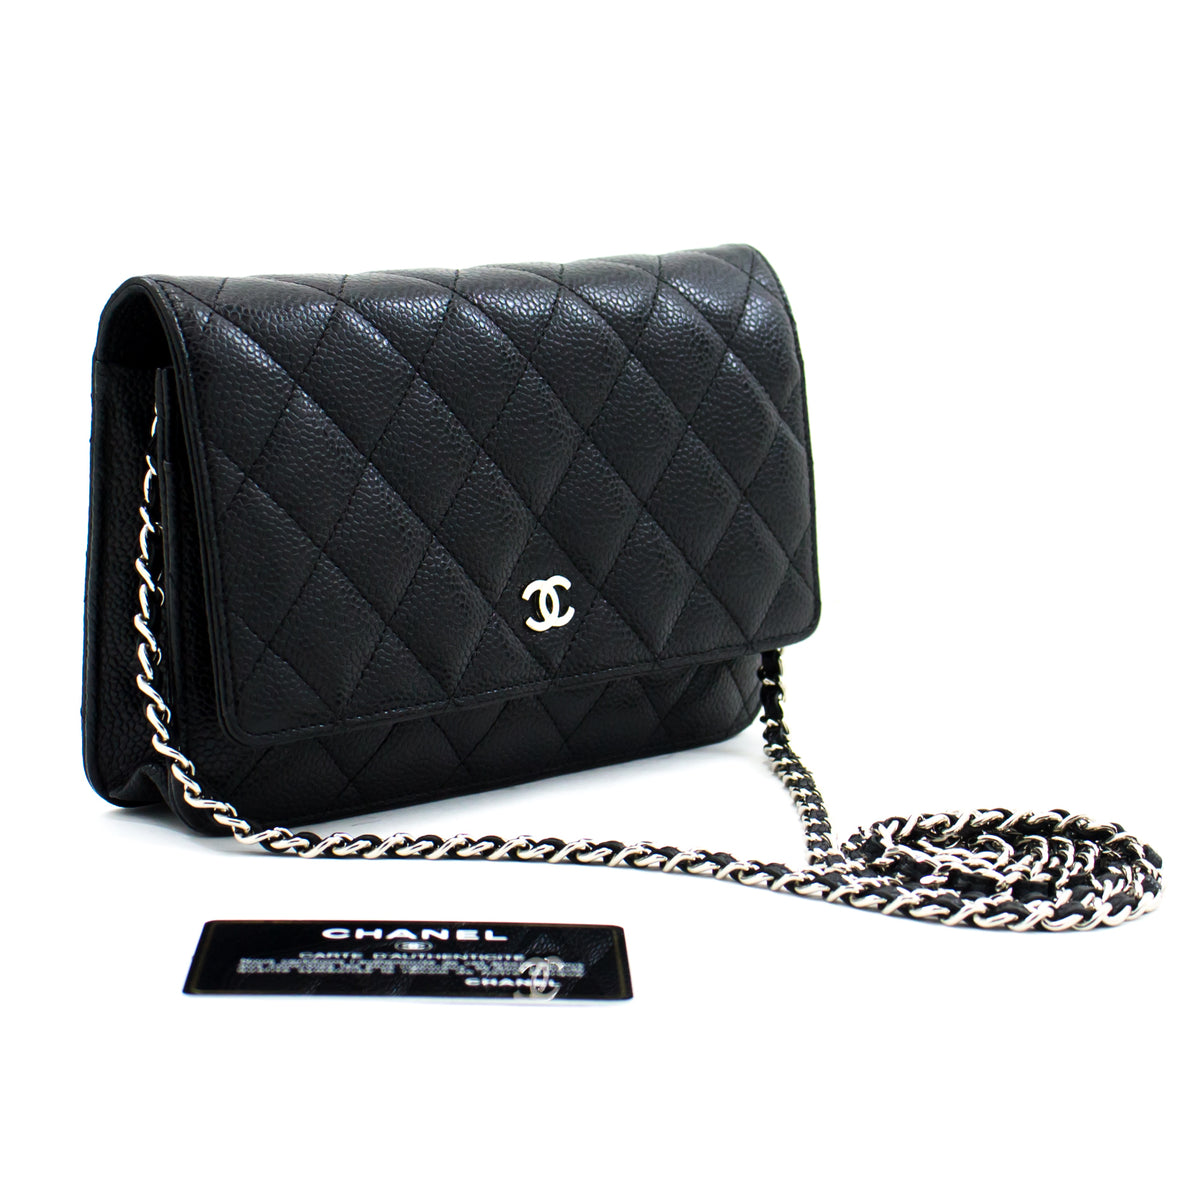 Chanel Large Classic Handbag 11Chain Shoulder Bag Flap Black Lamb h44